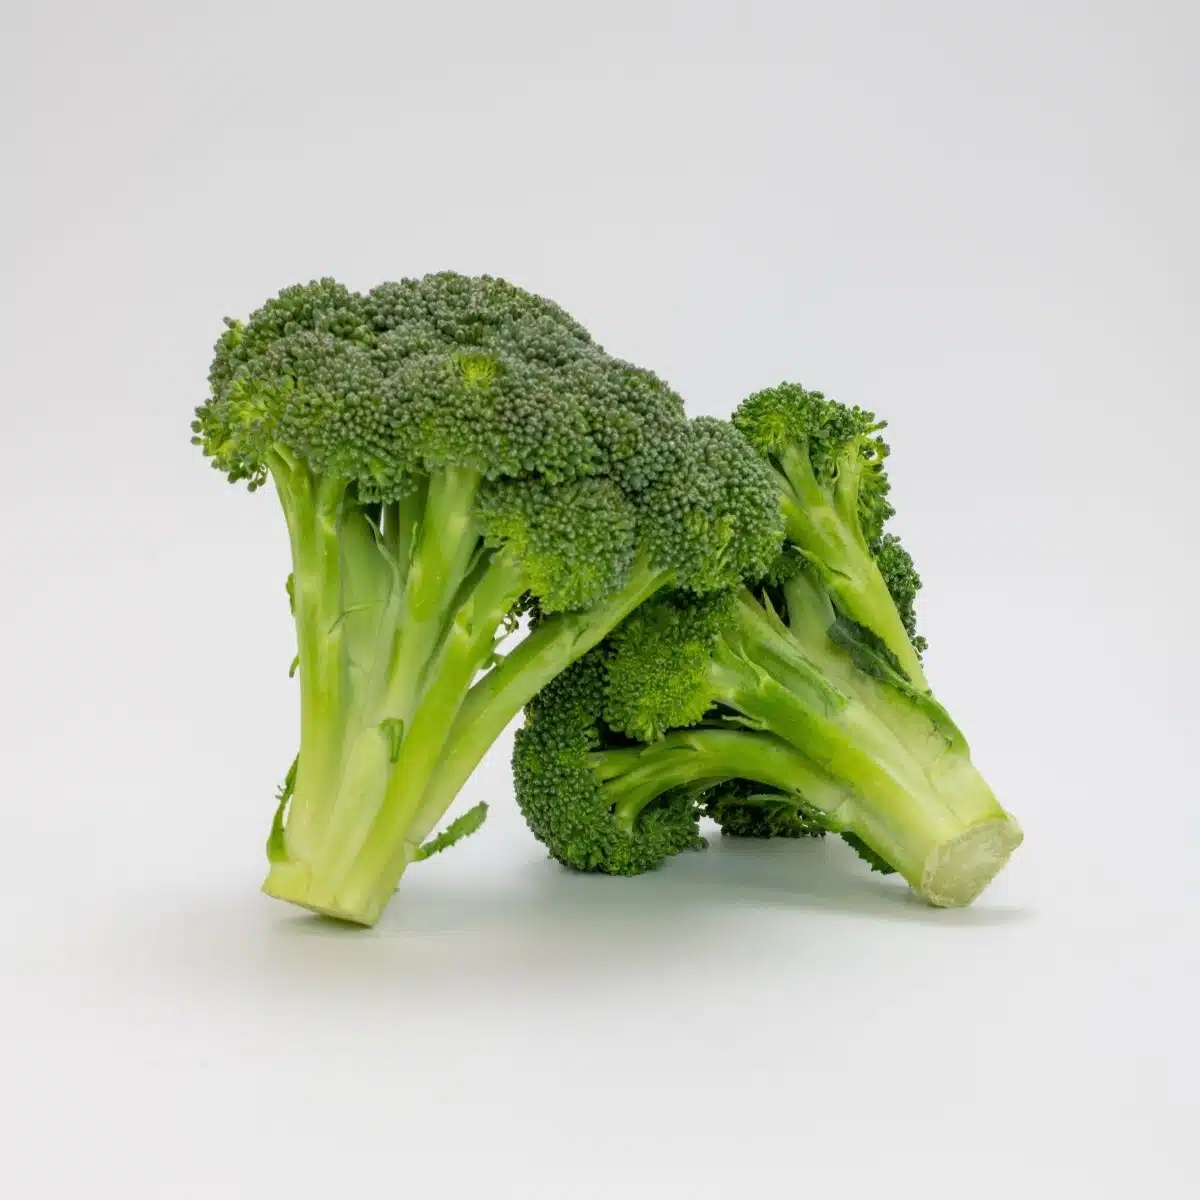 Is Broccoli Low FODMAP?